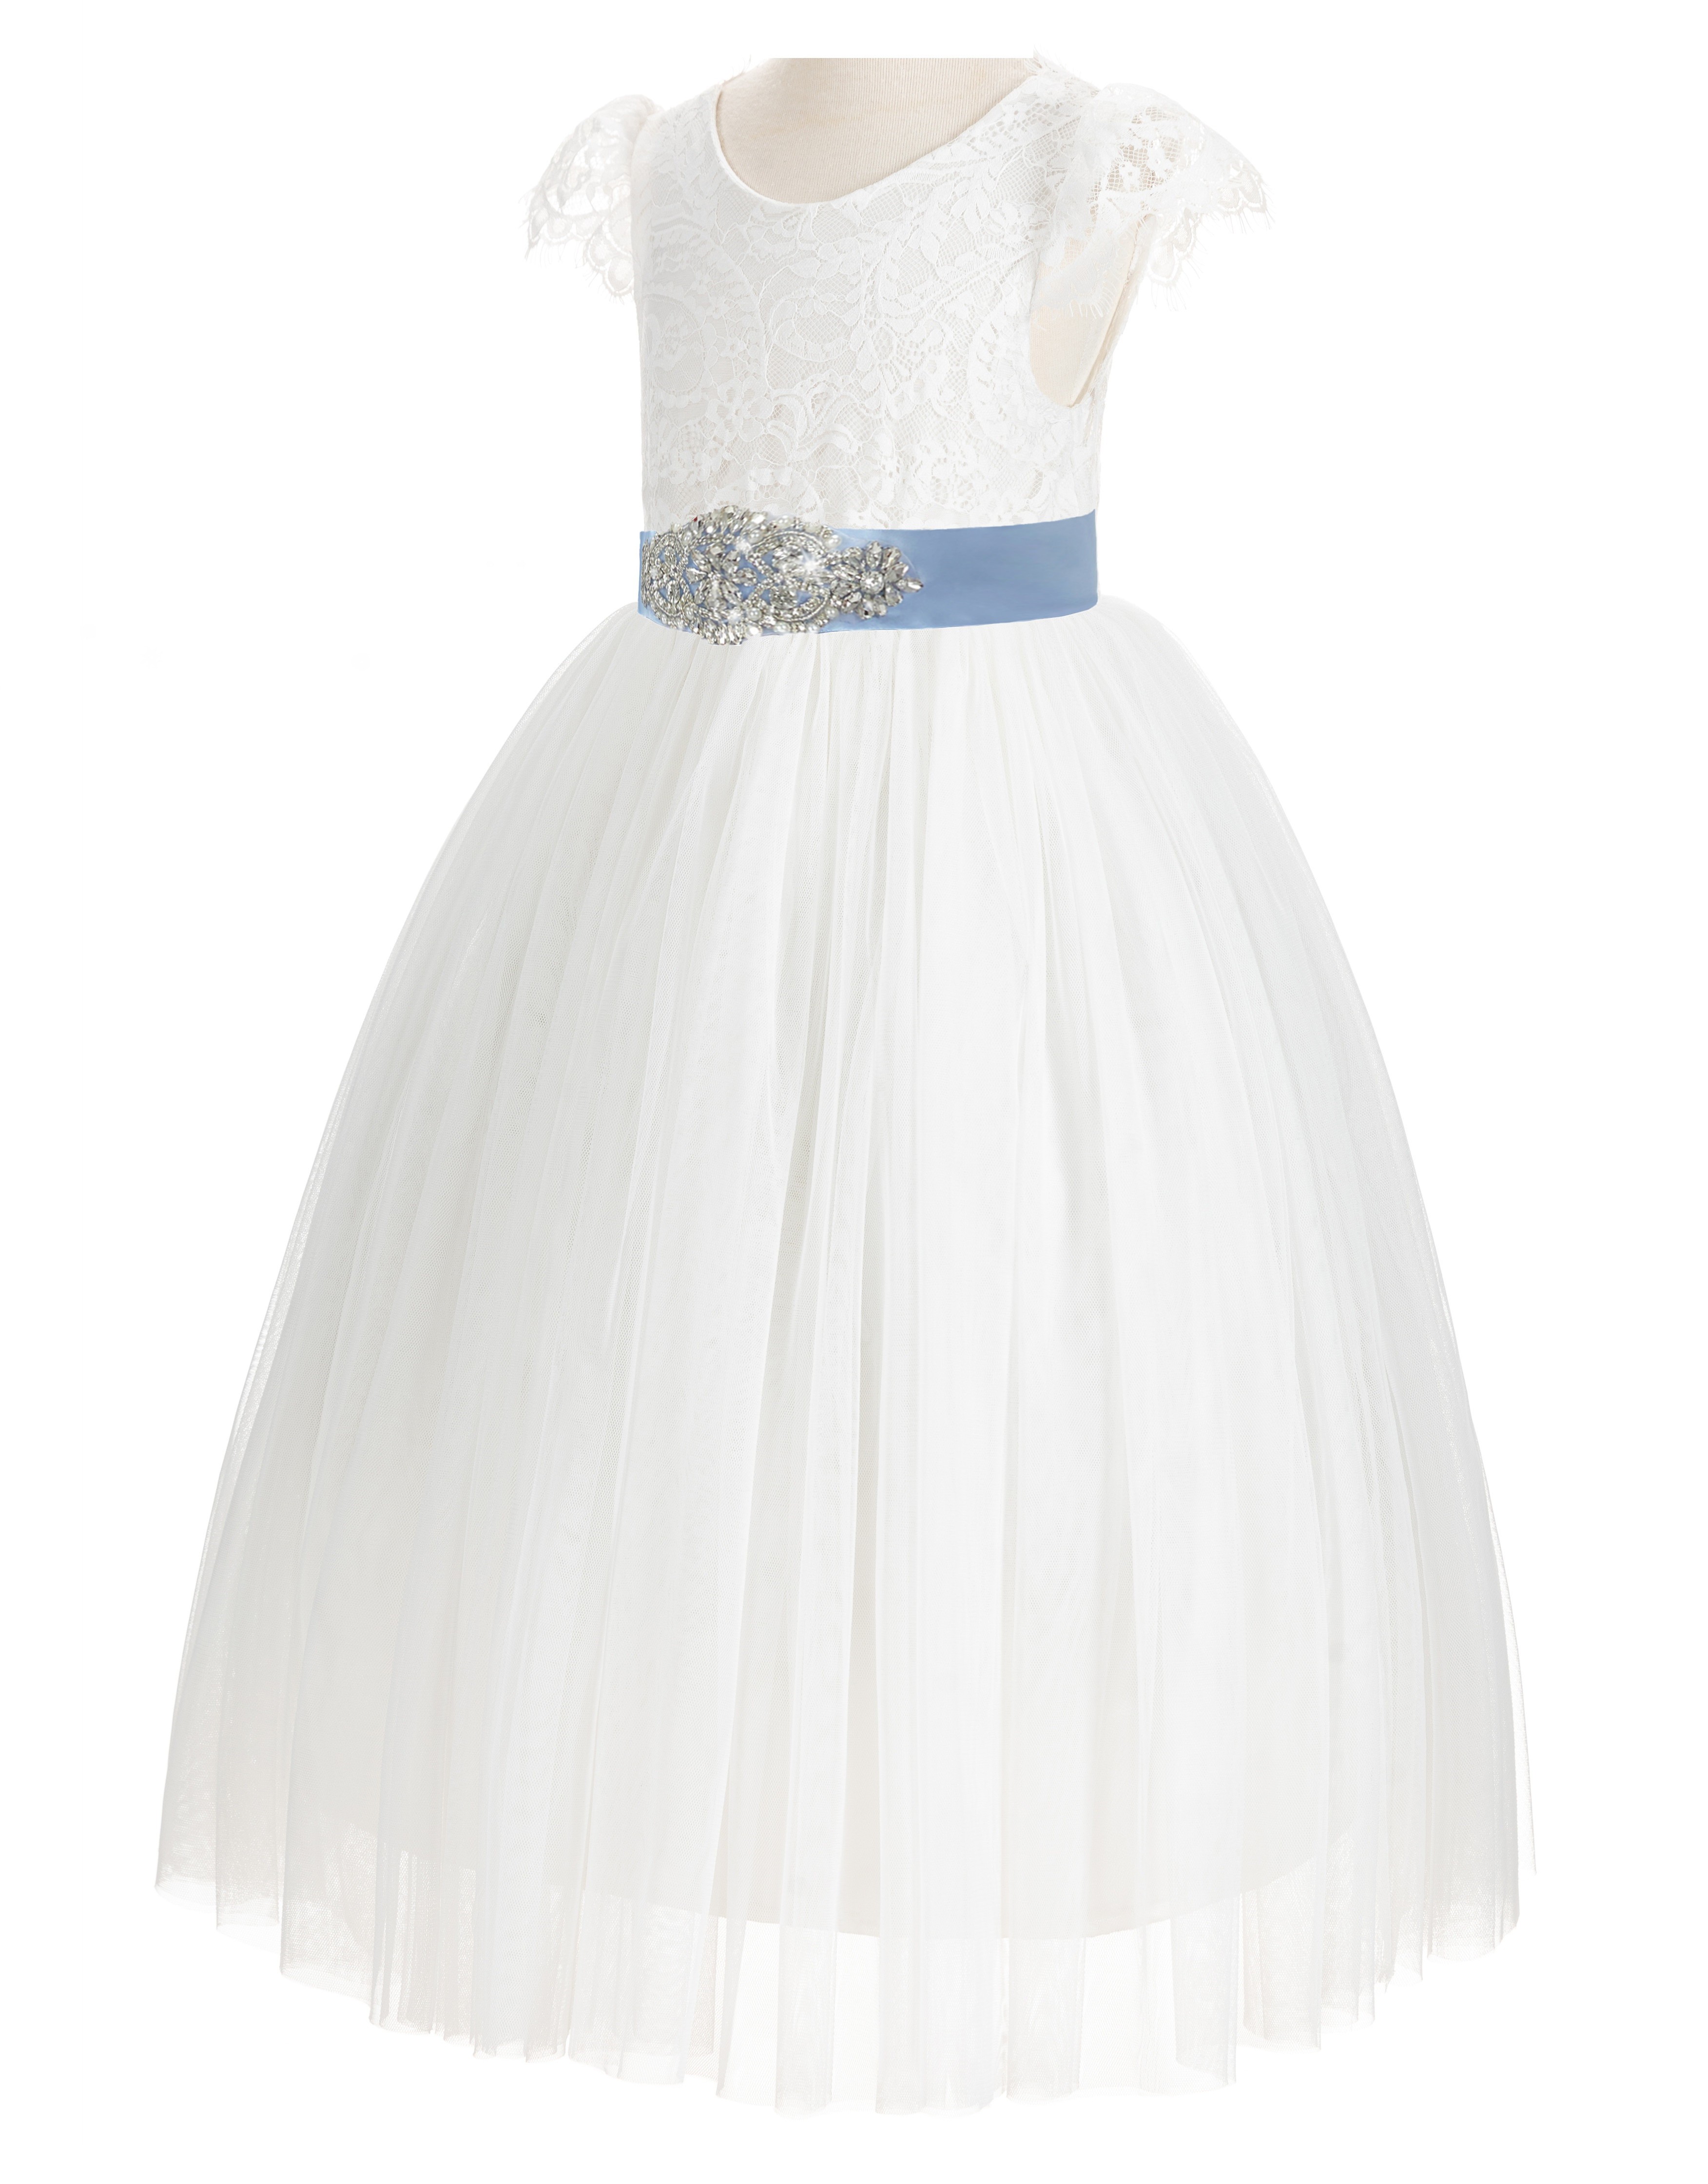 Ivory / Dusty Blue Cap Sleeves Lace Flower Girl Dress V-Back Lace Dress 622R3